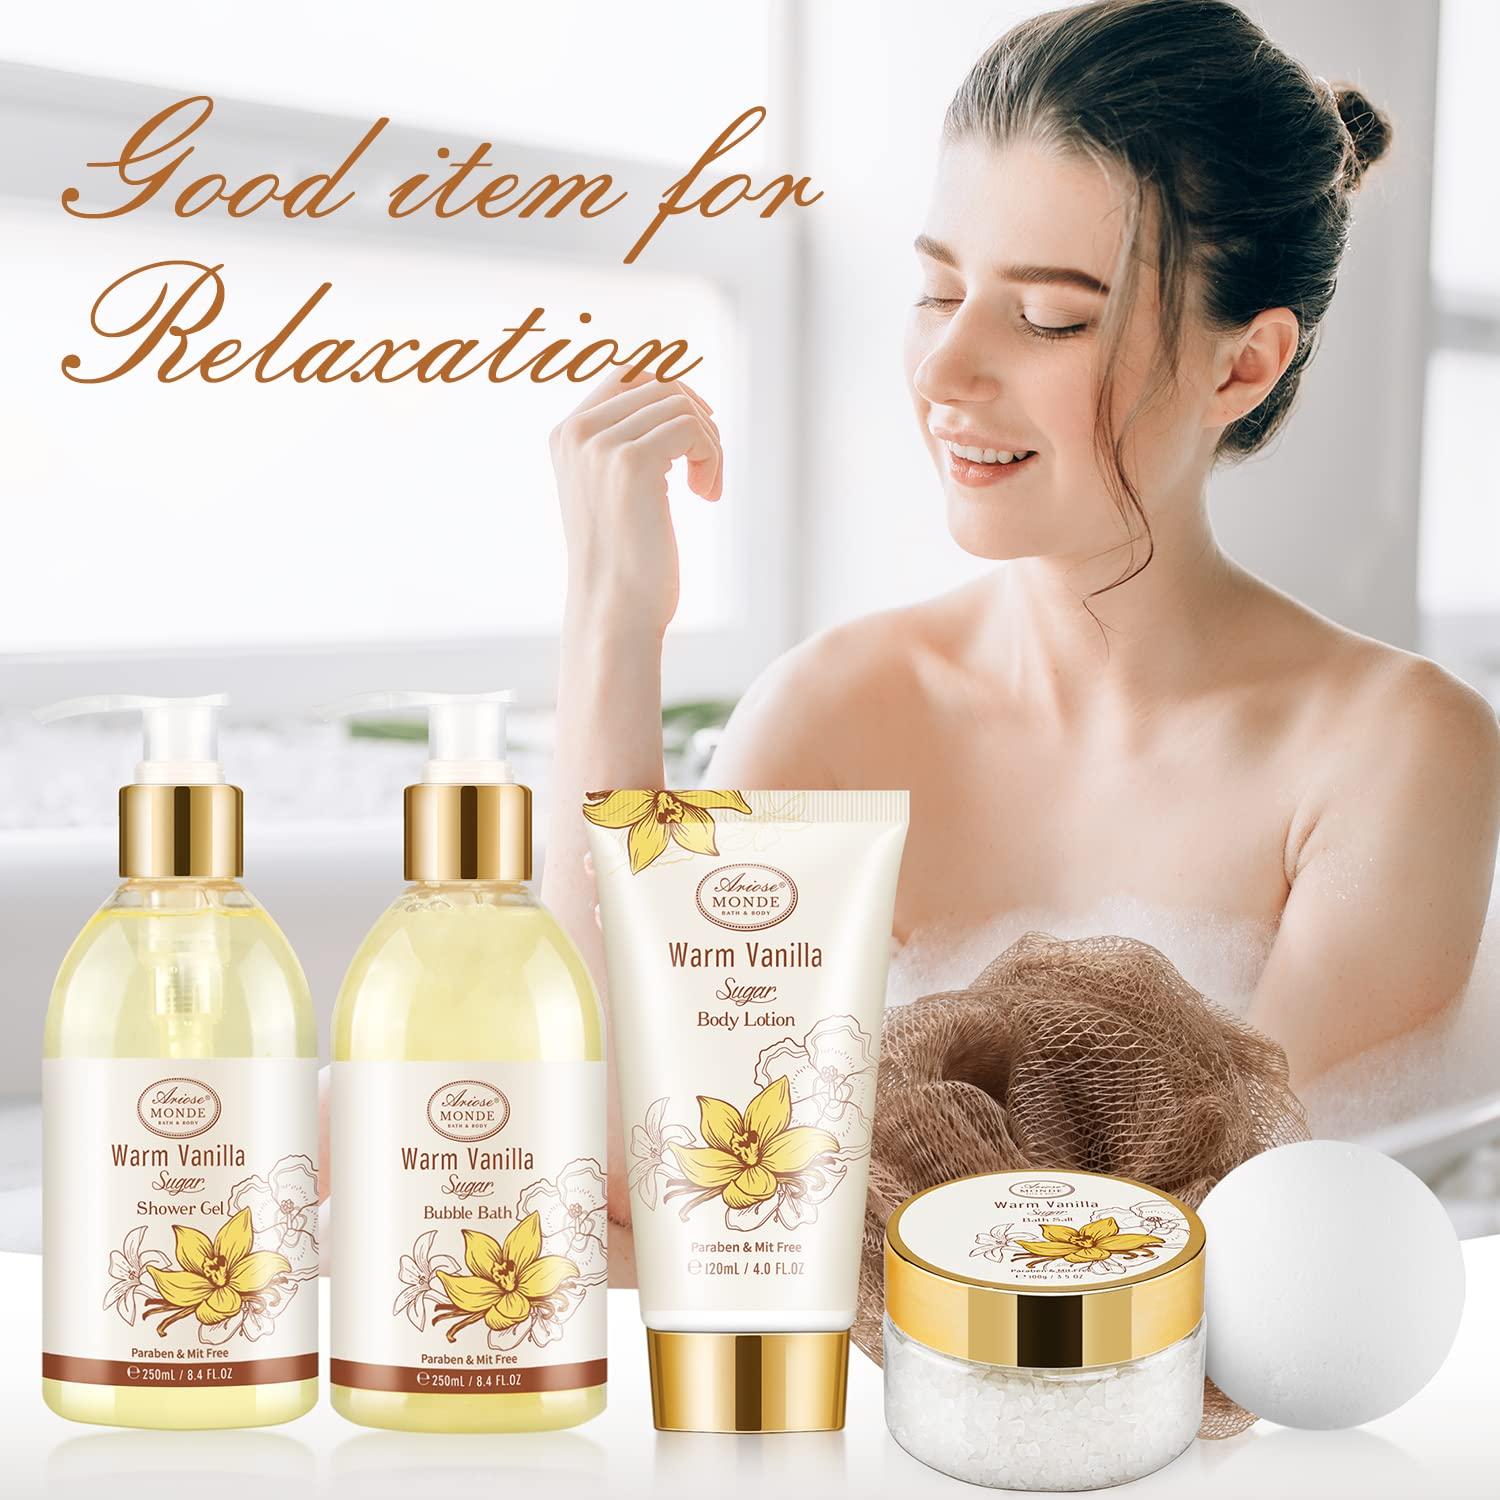 Buy Our Version of Bath & Body Works Warm Vanilla Sugar Lotion